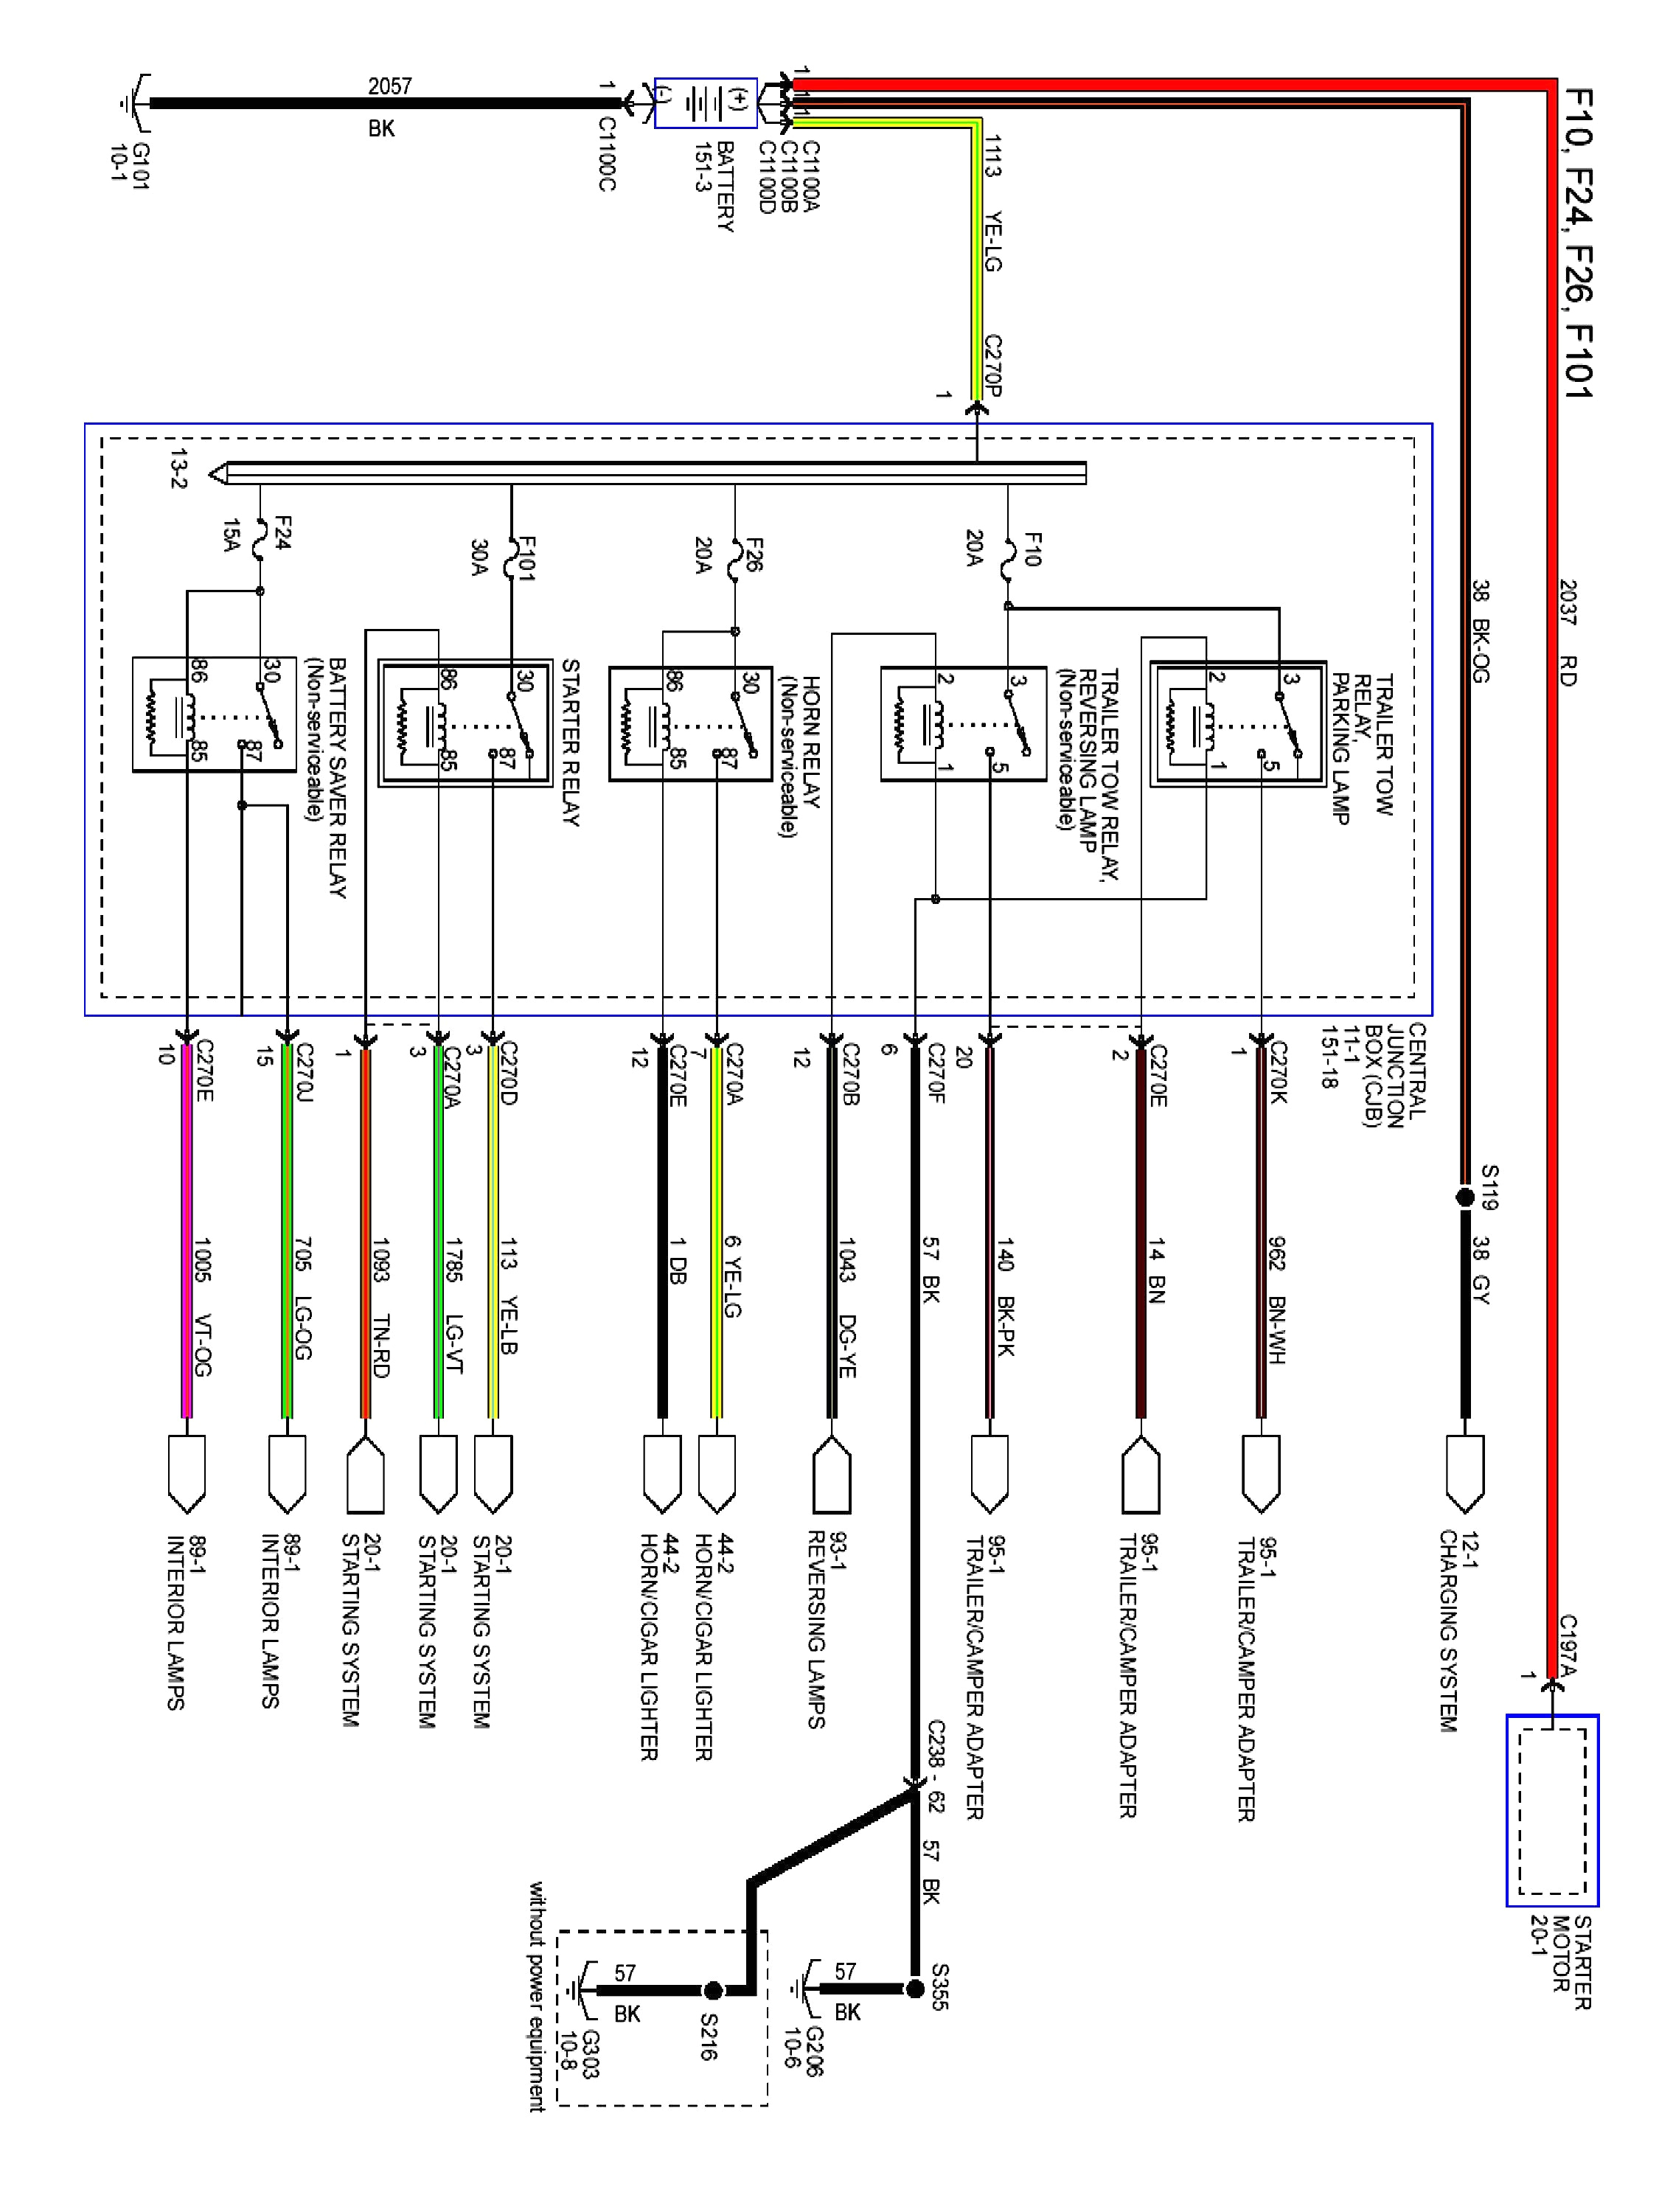 m audio wiring diagrams wiring diagram imgm audio speaker wiring diagram wiring diagram sample m audio